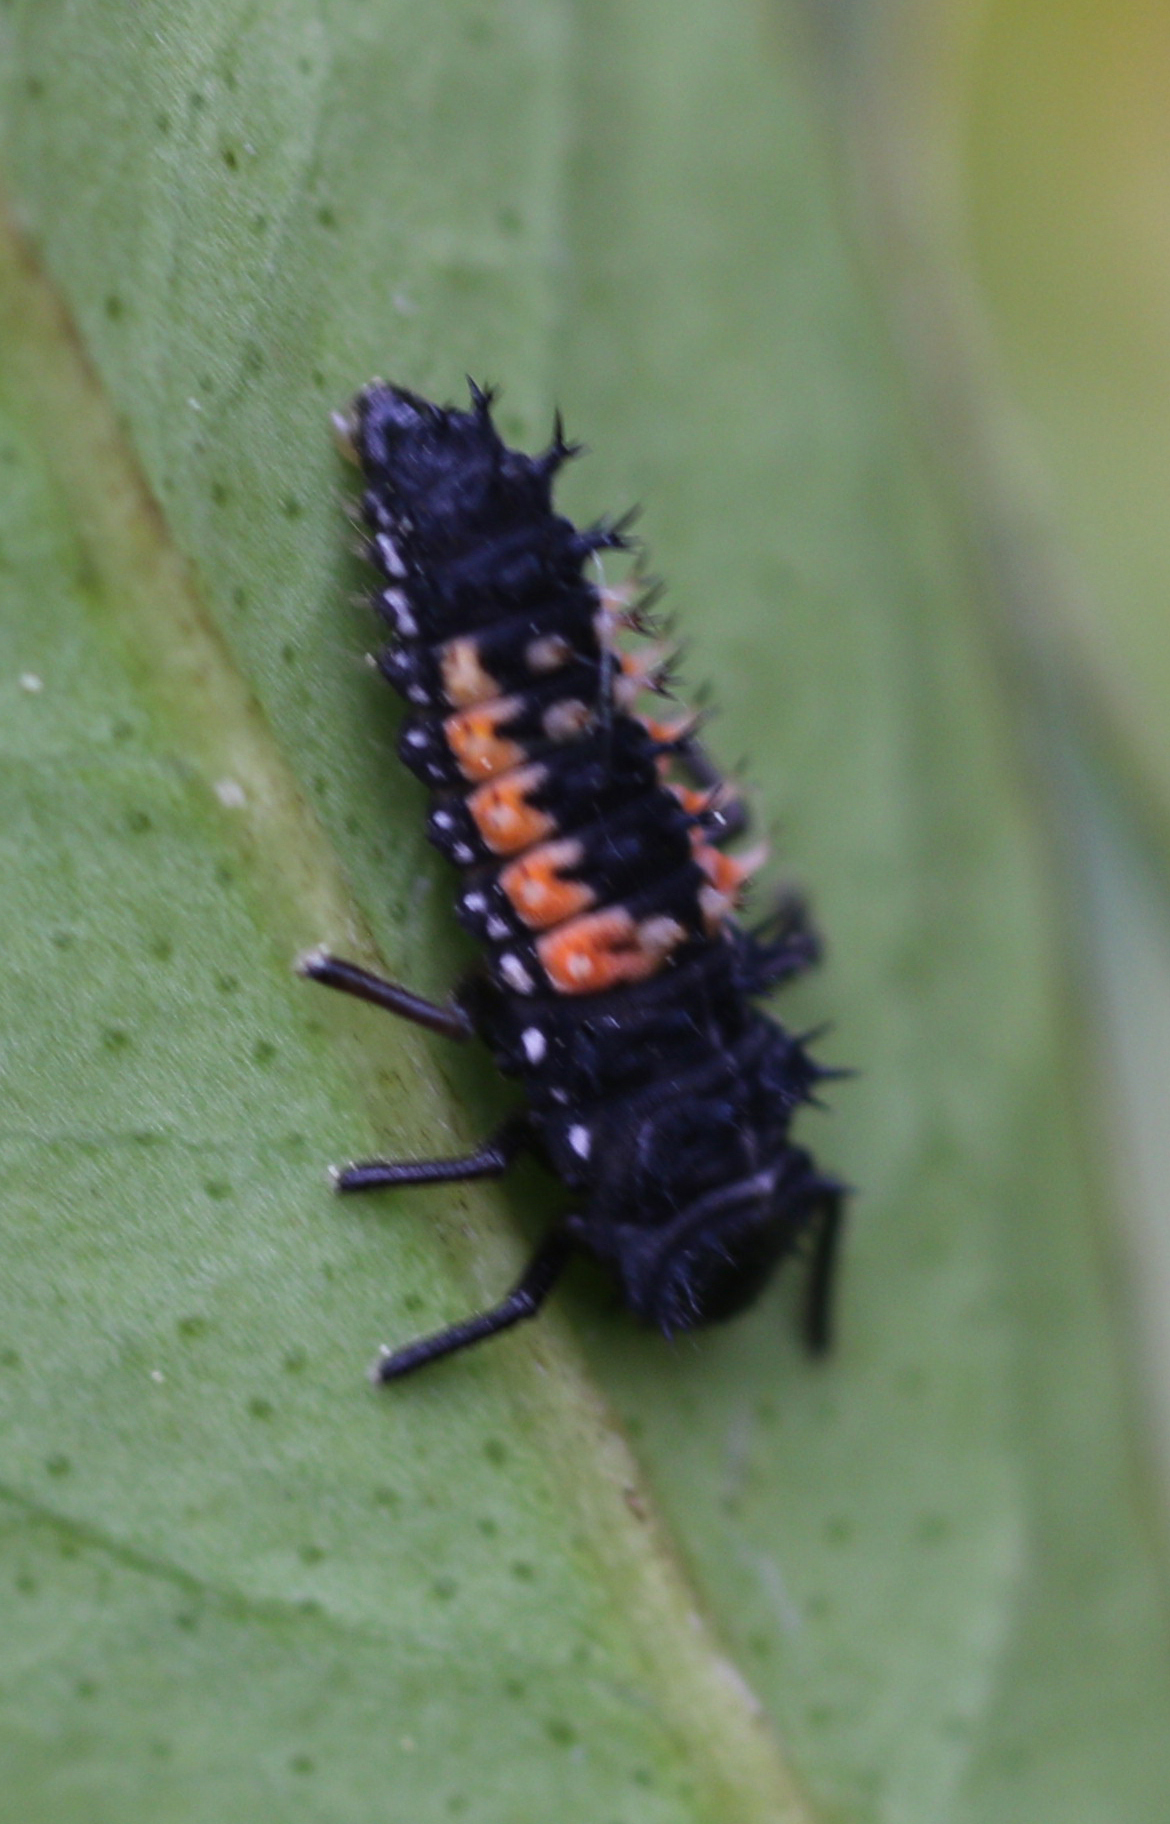 https://www.nps.gov/articles/000/images/IMG_4851-Lady-Bug-Larva-CSchelz-2020_cropped_1.jpg